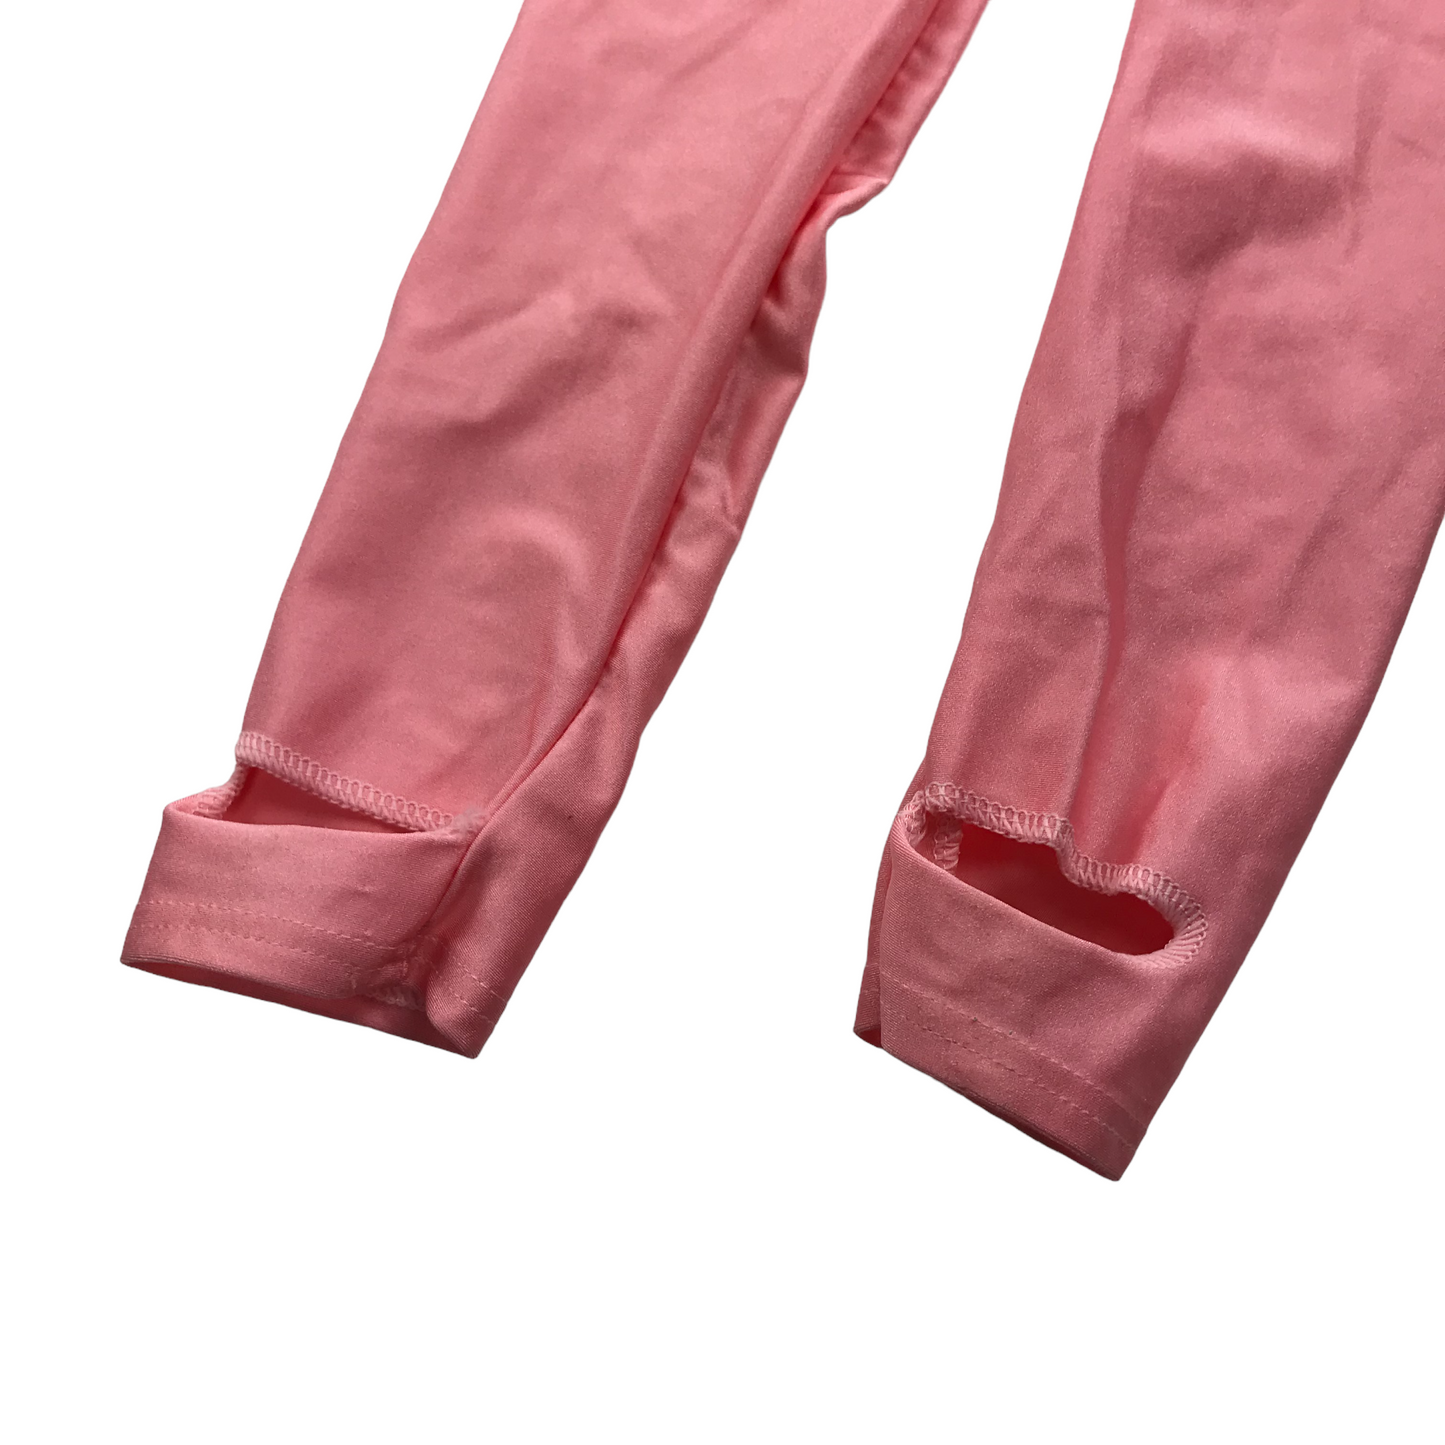 Katz Dancewear Pink Sleeveless Unitard Age 9-10